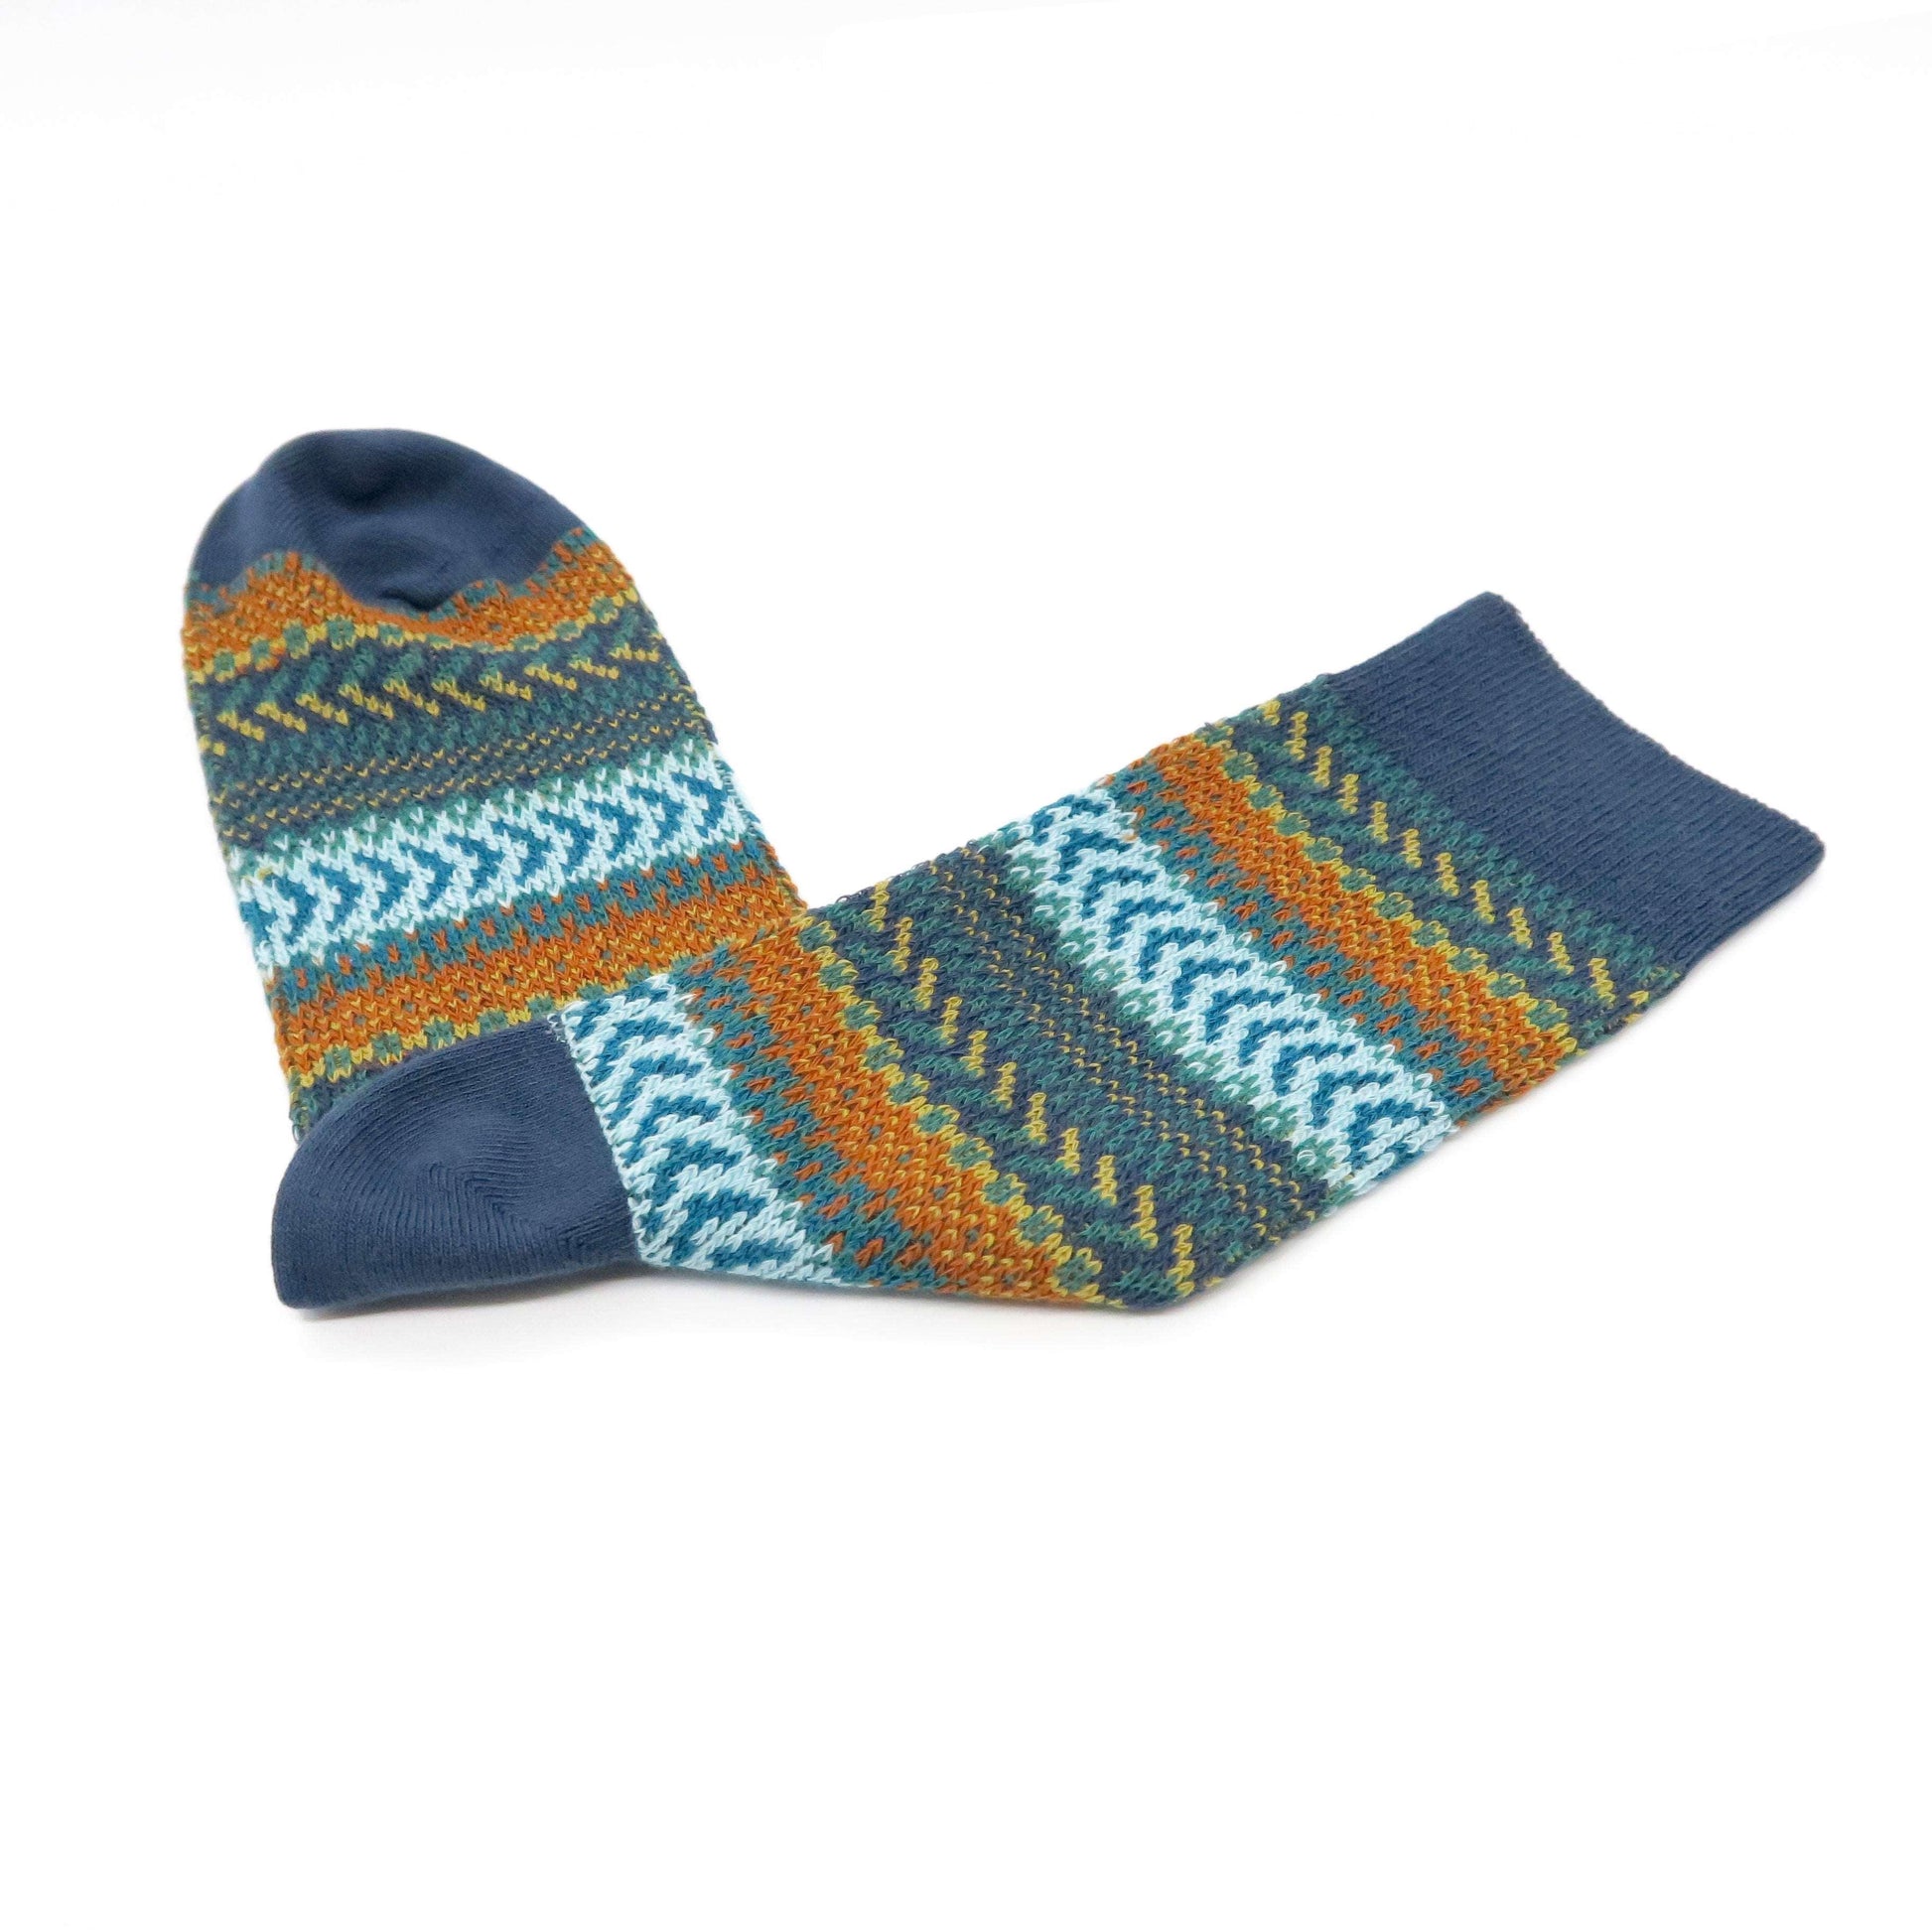 flecha sock - blue and green arrow stripy pattern unisex socks